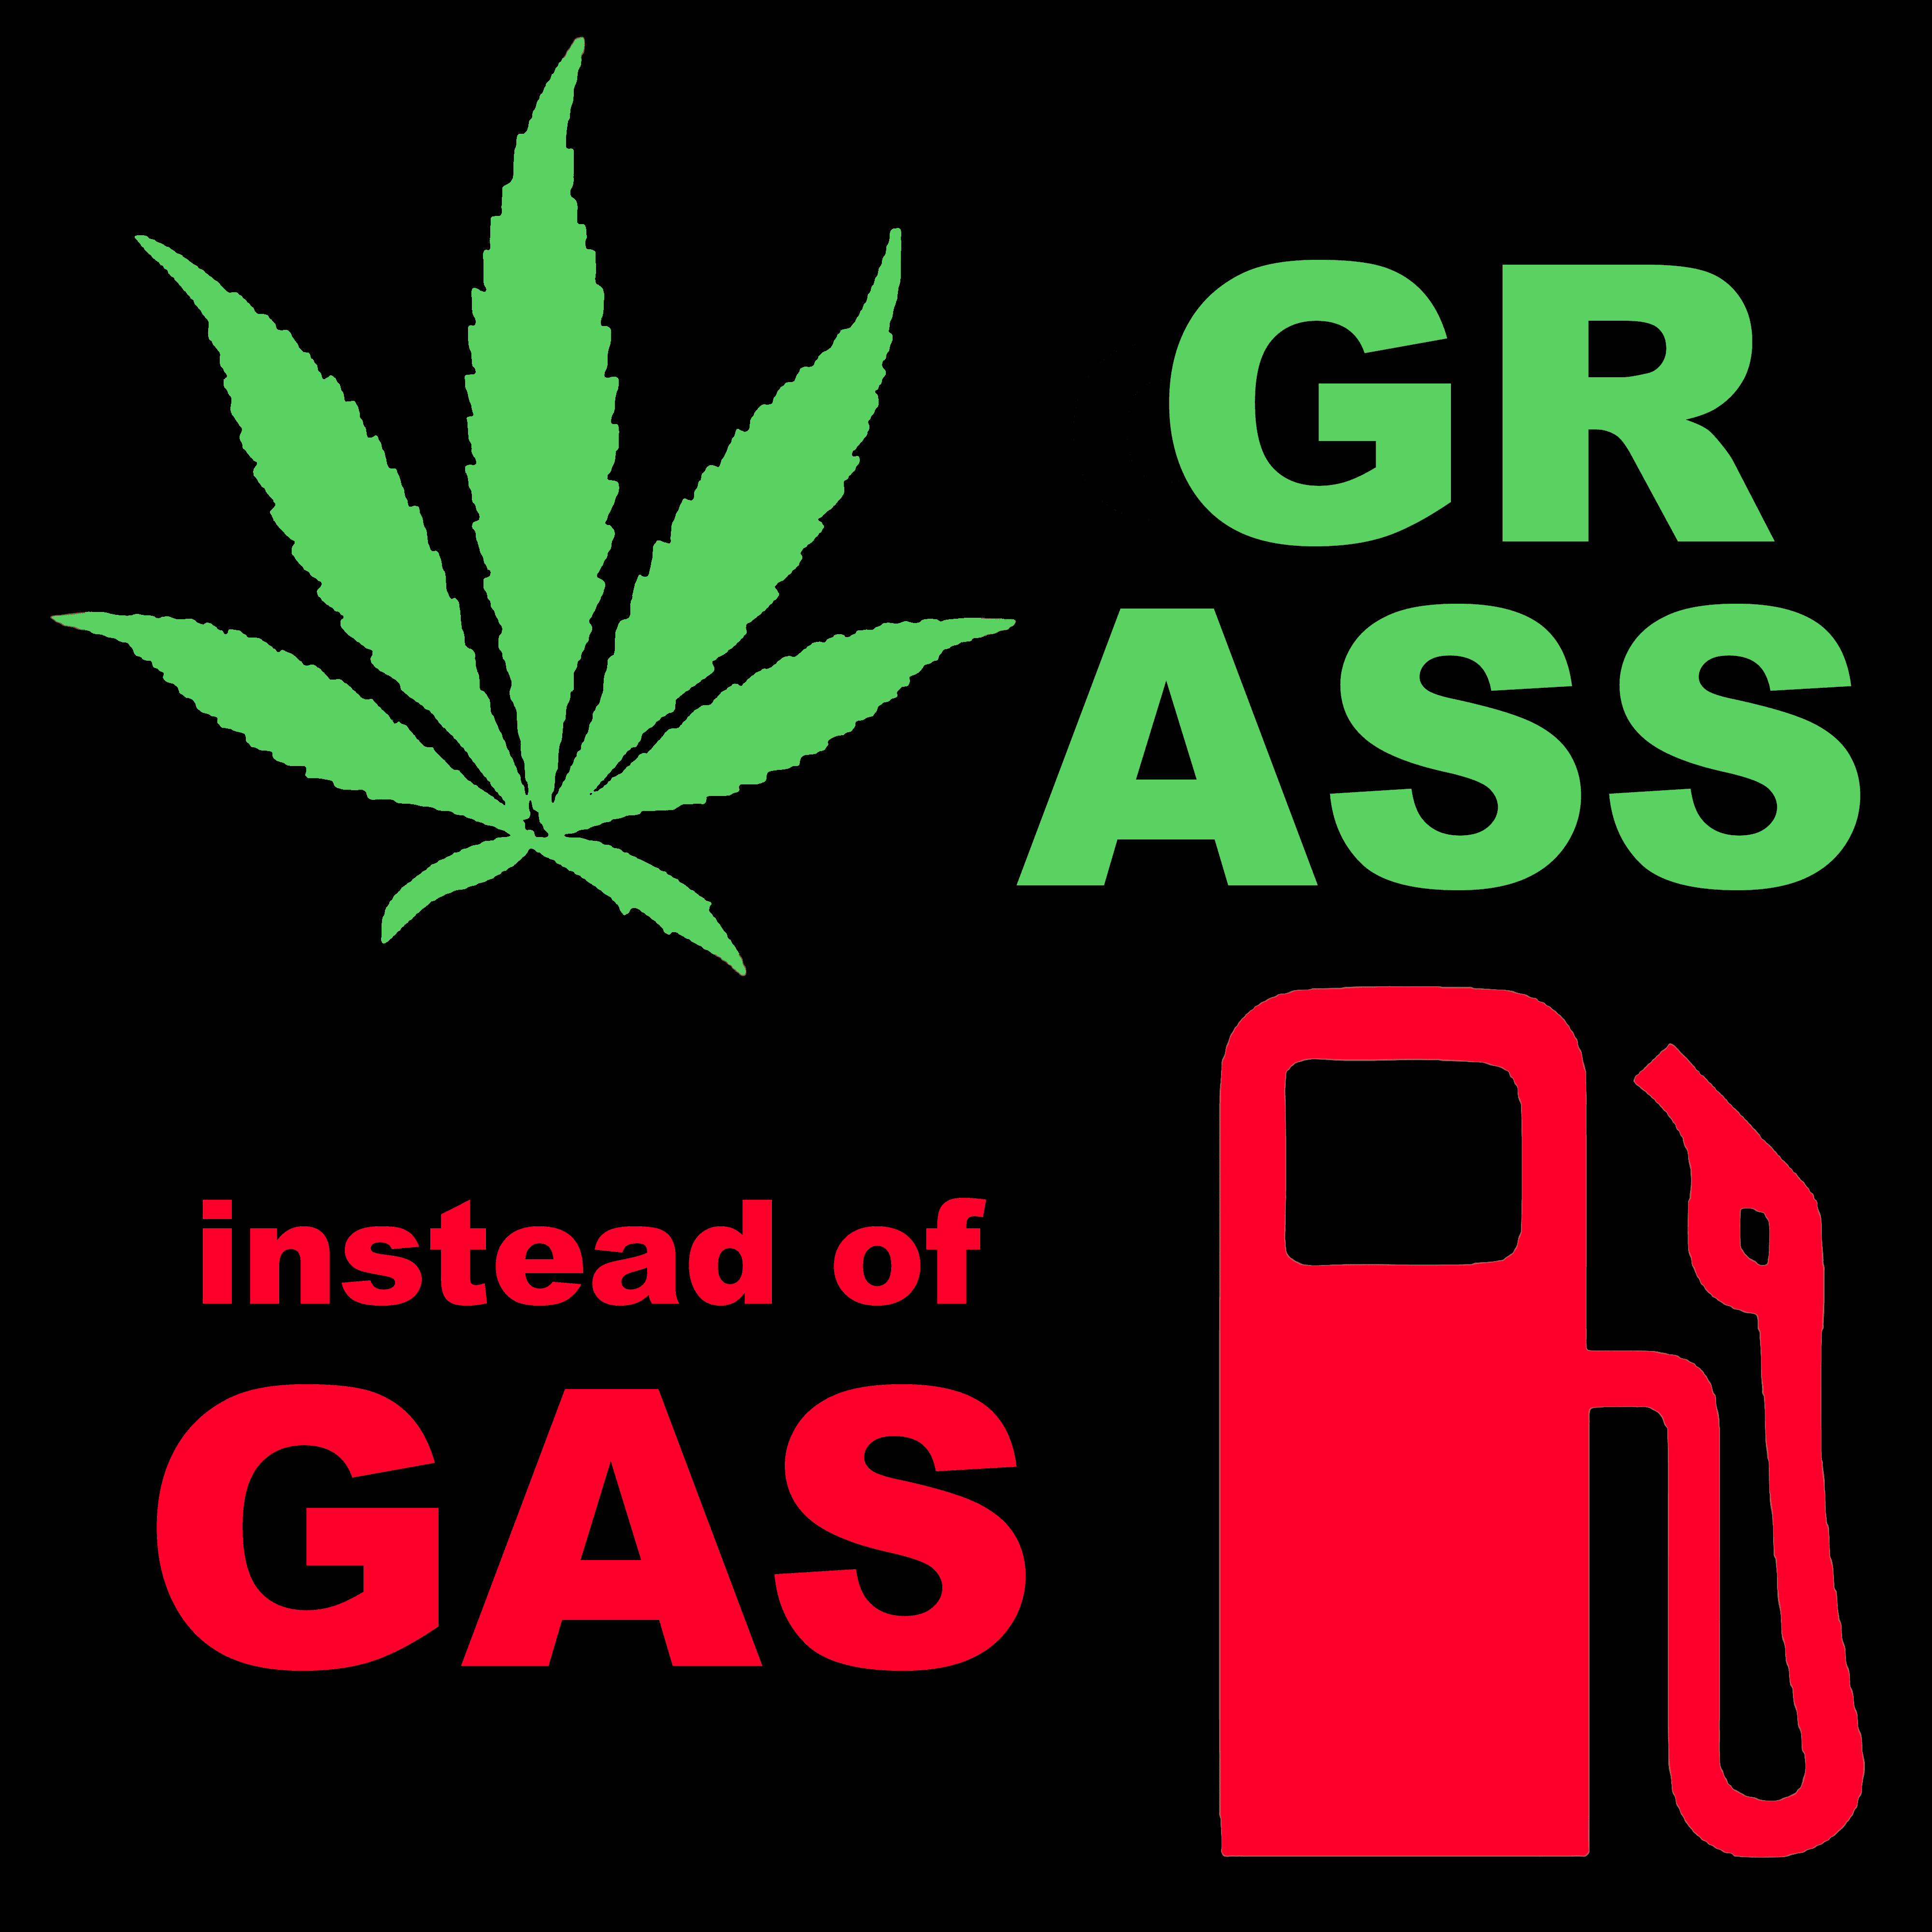 GRASS instead of GAS